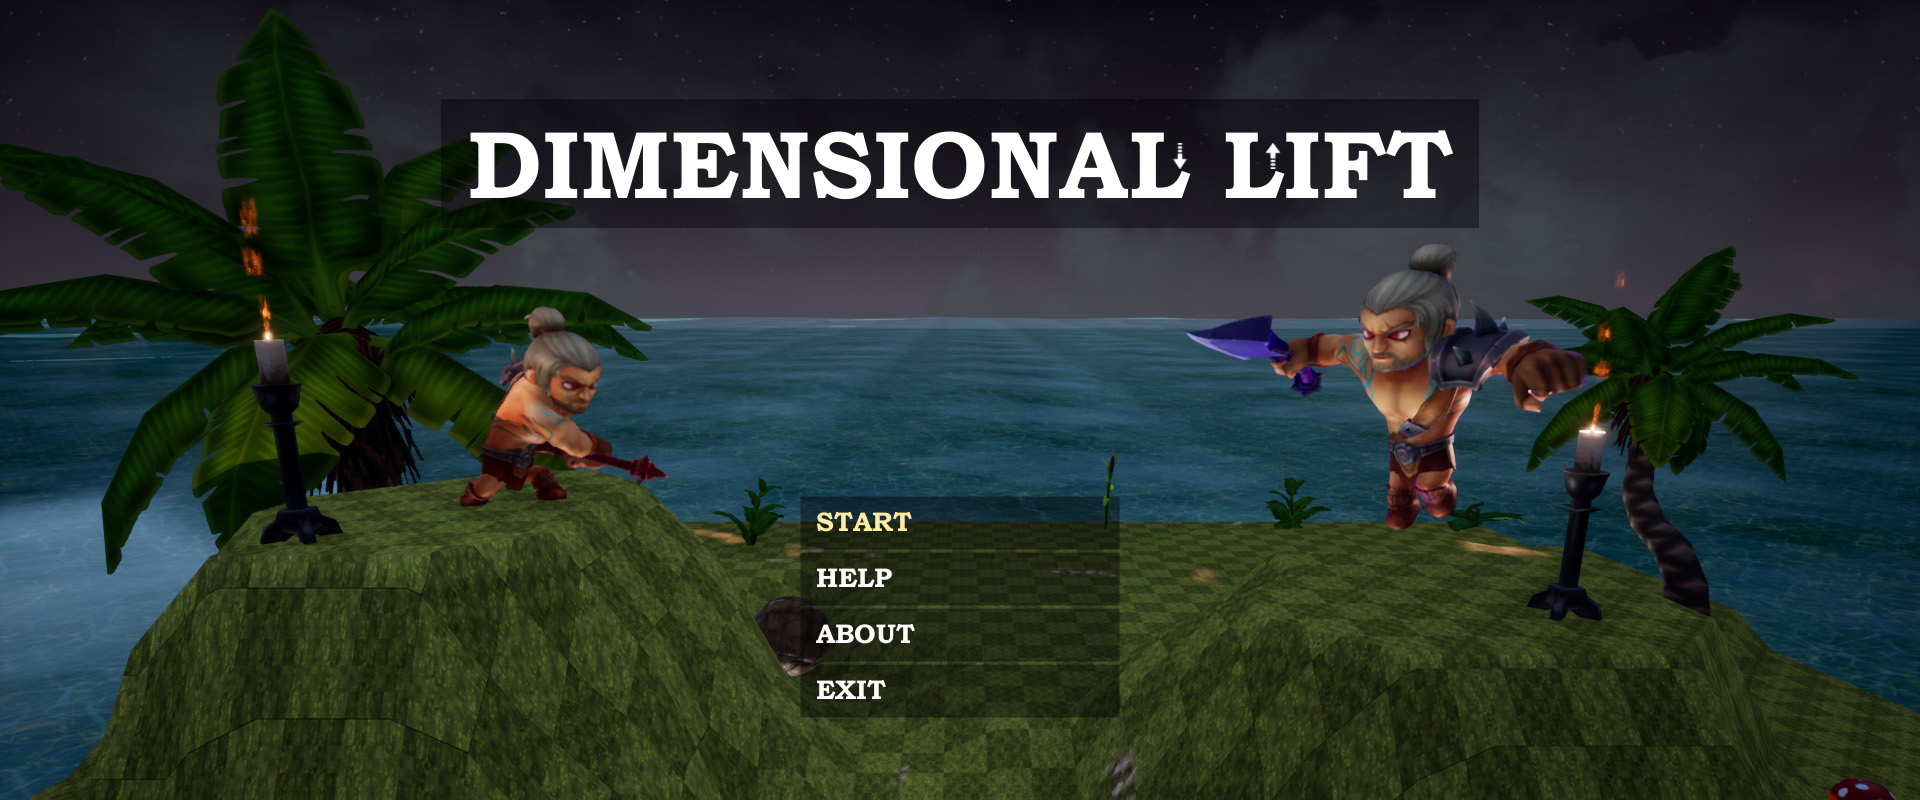 GameJam November – Dimensional Lift